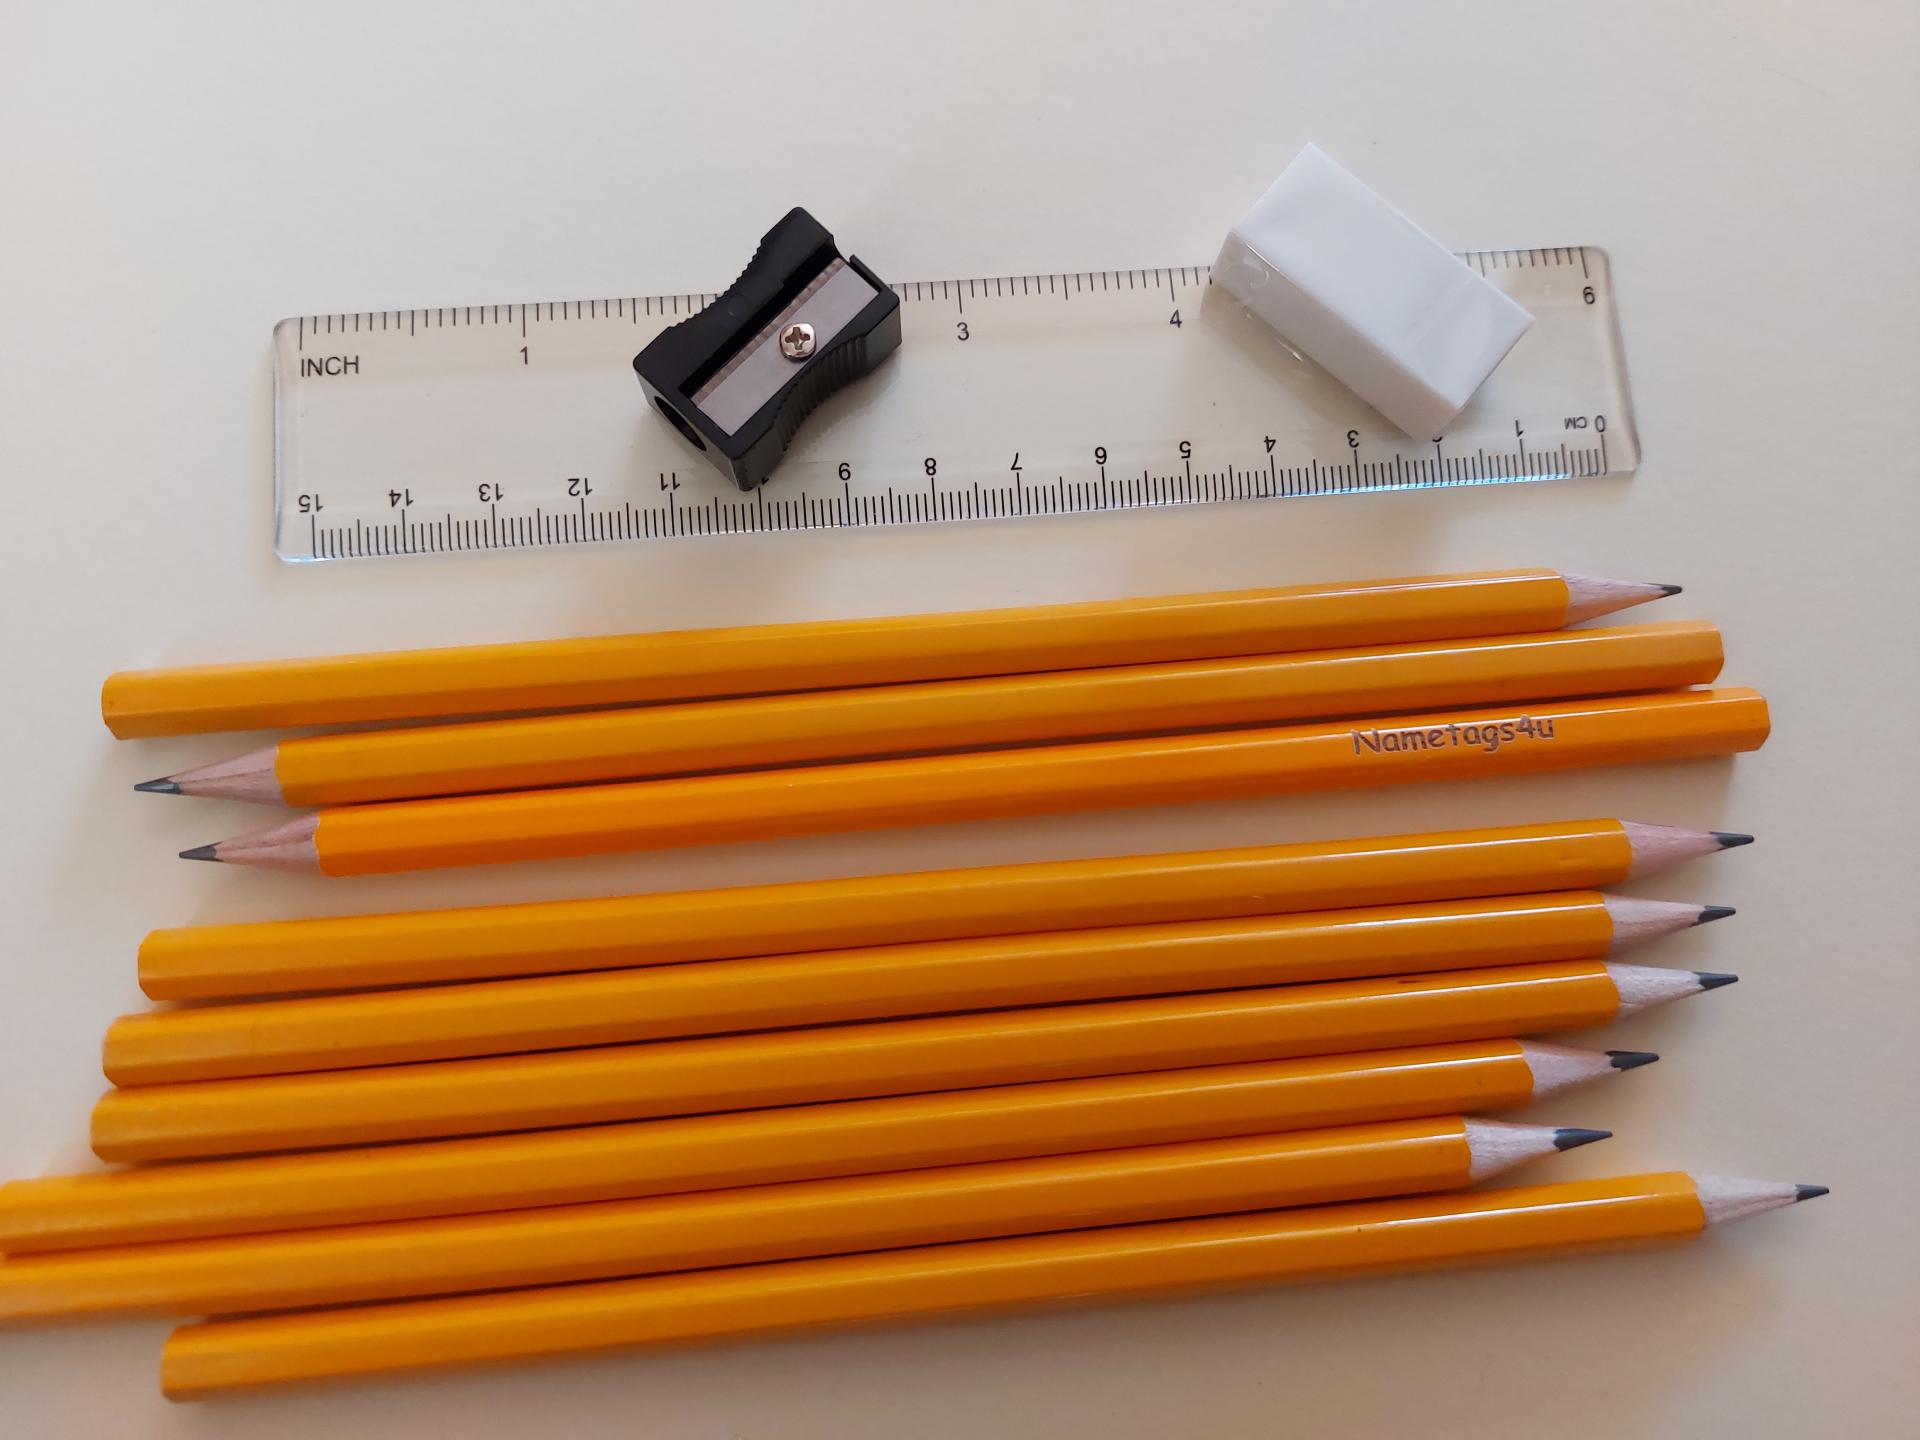 8 Engraved Writing Pencils + Rubber, Sharpener & Ruler